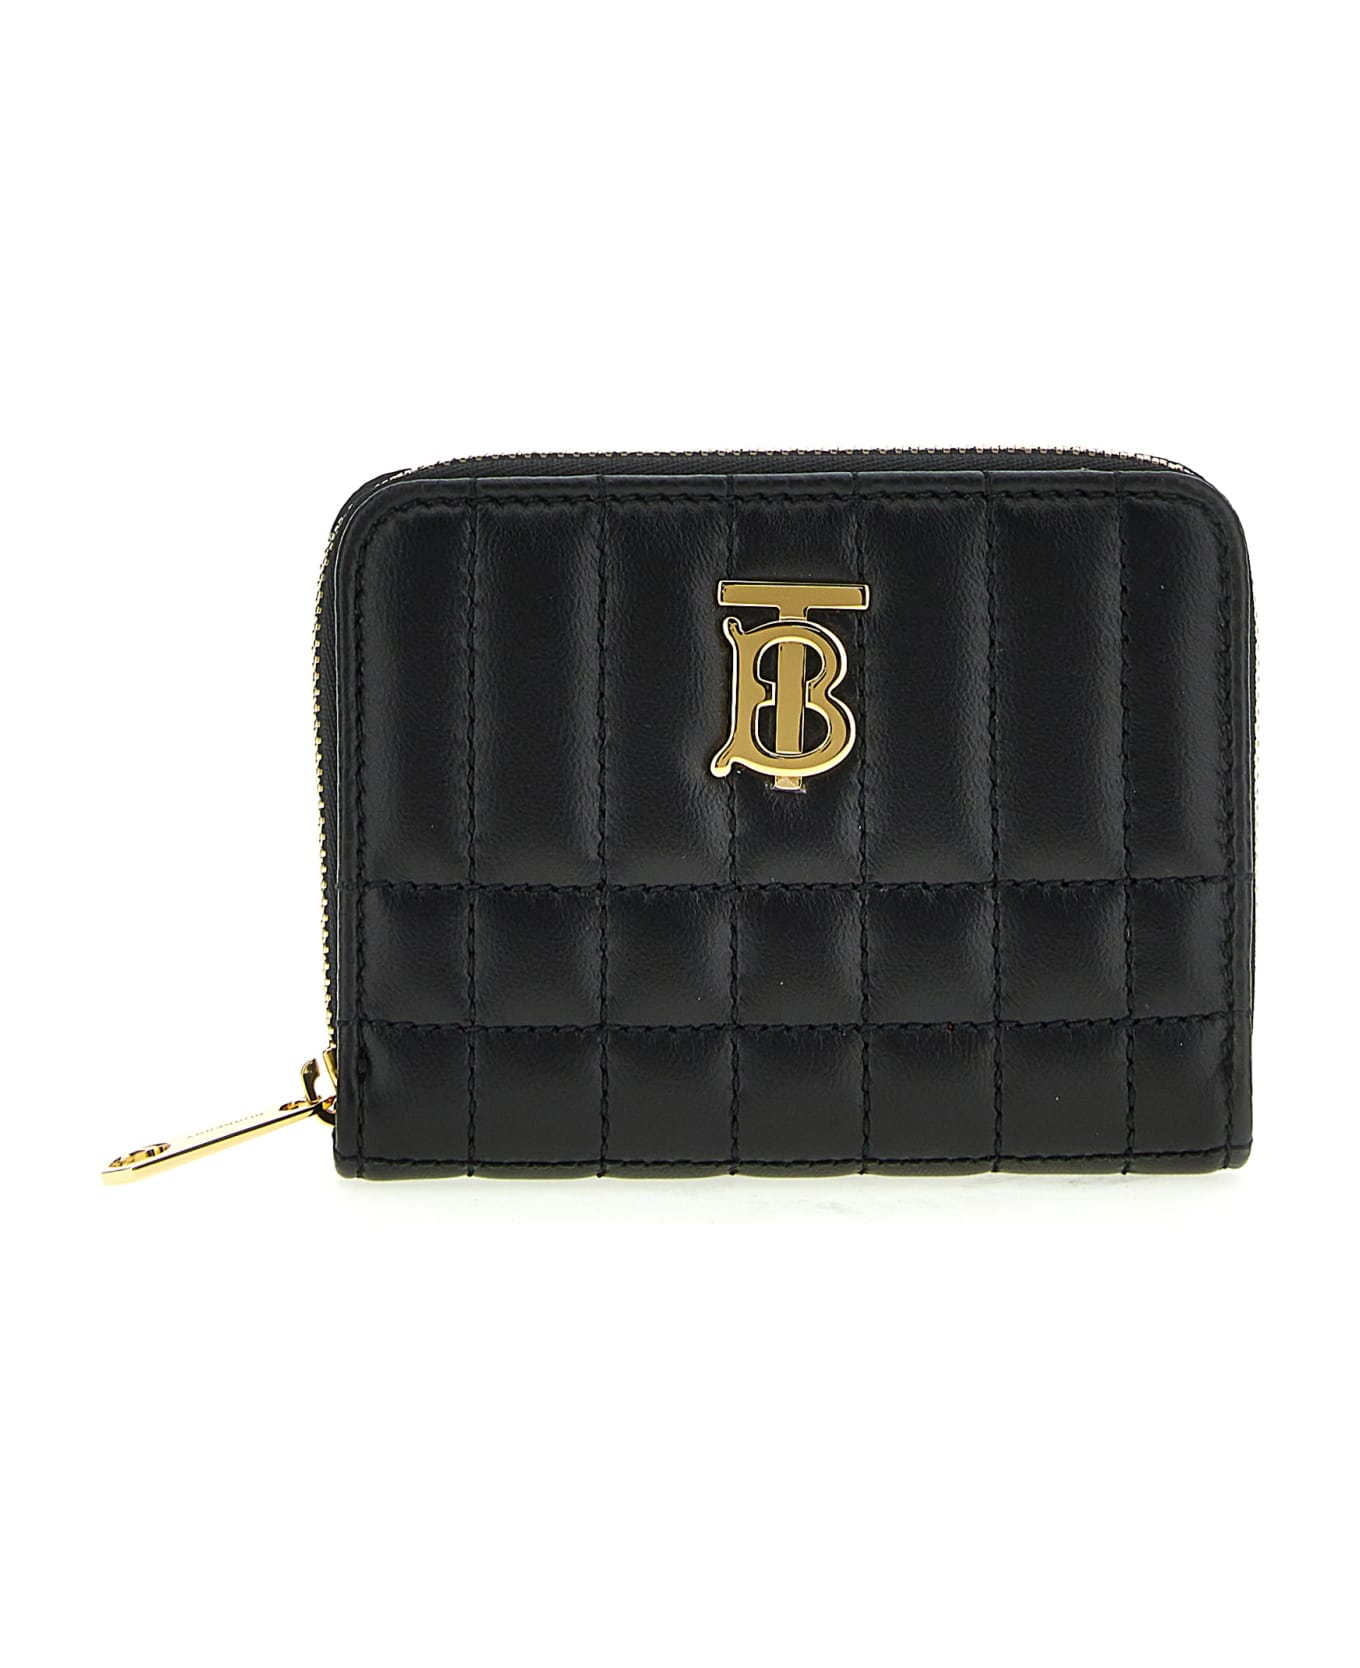 Burberry 'lola' Wallet - Black   財布